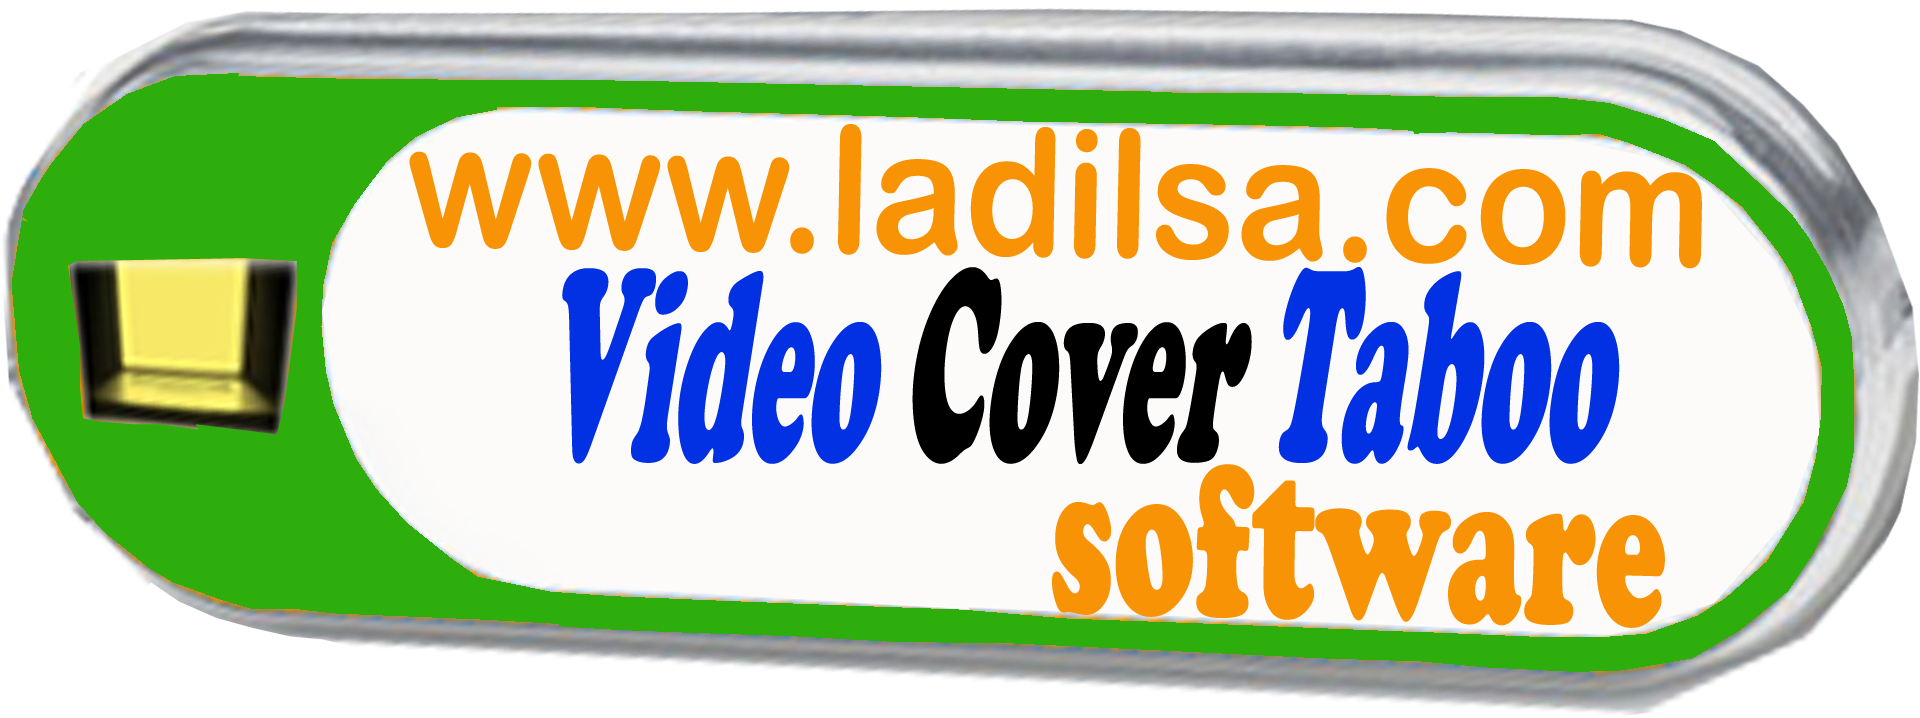 video cover taboo dashboard login